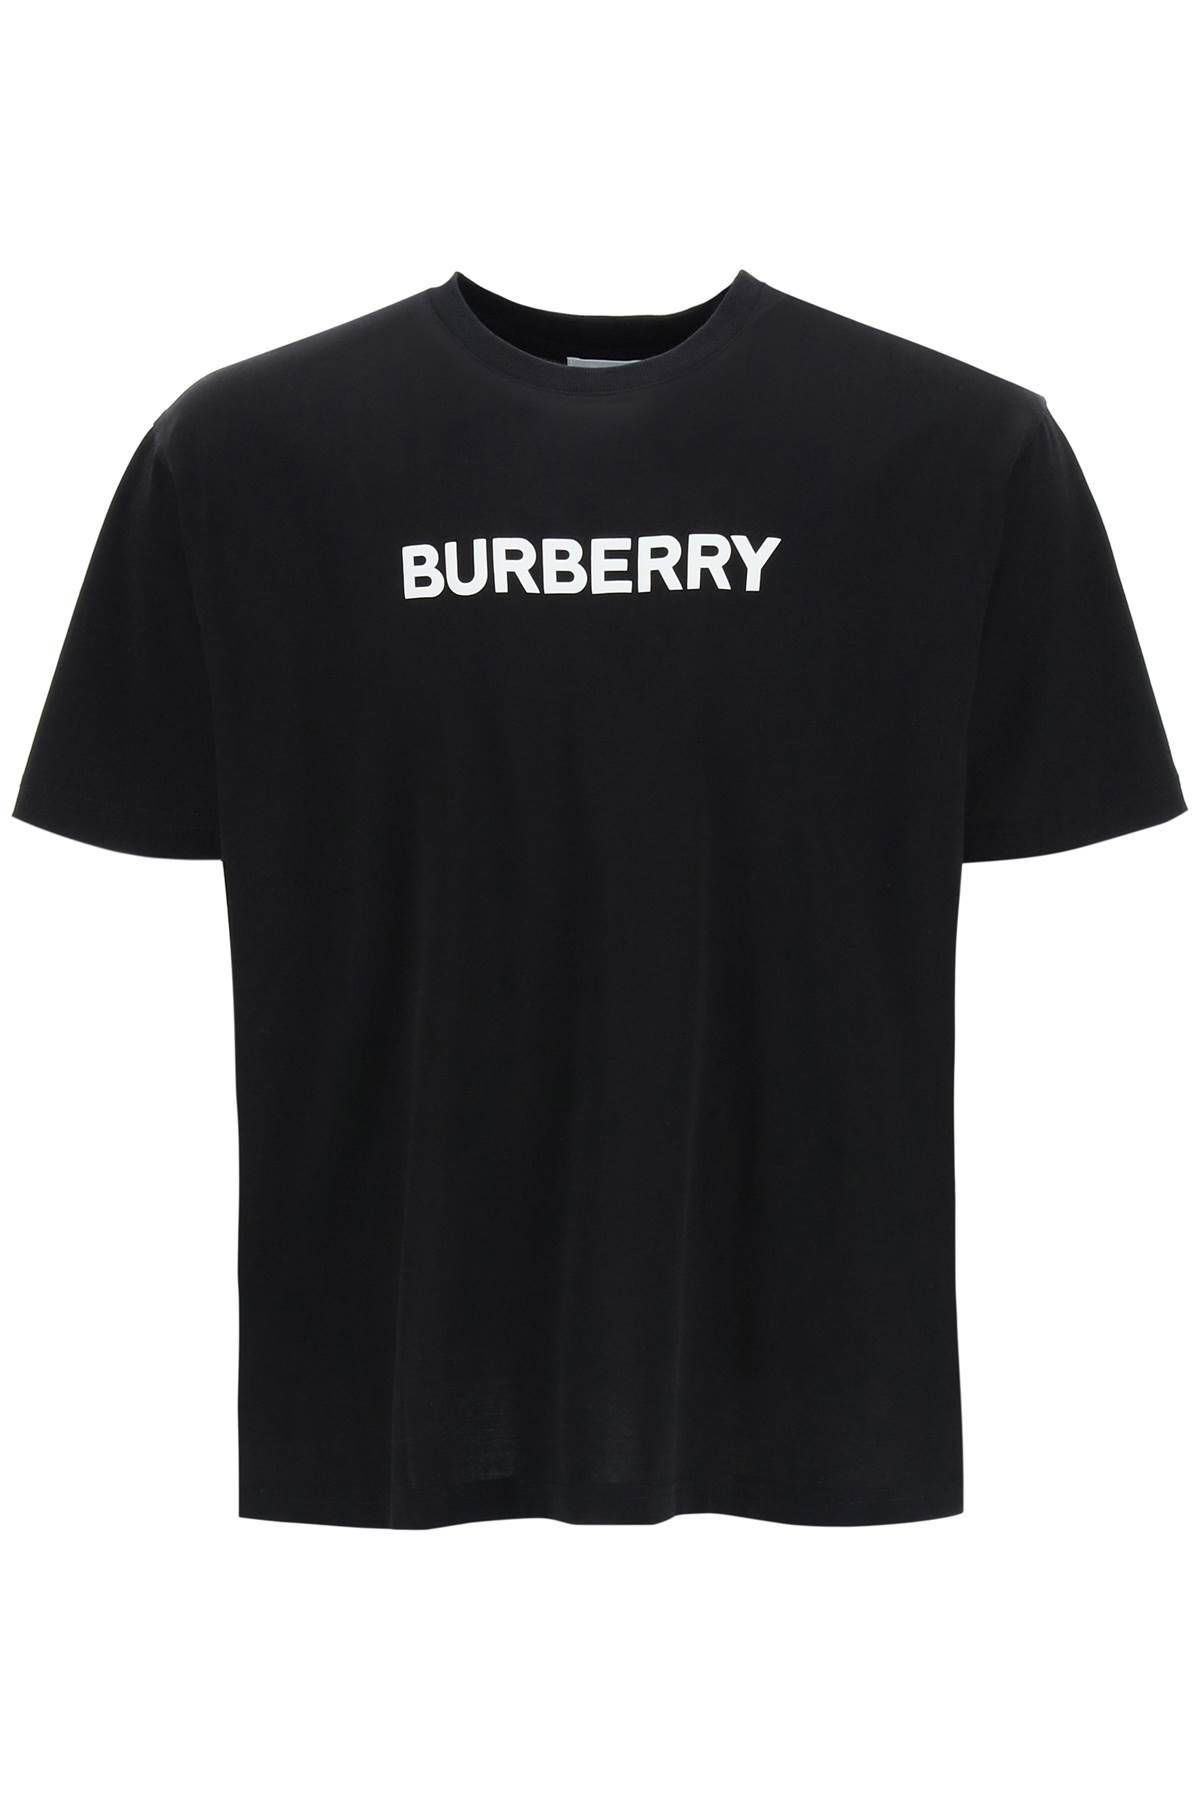 Burberry BURBERRY harriston replen t-shirt with logo print